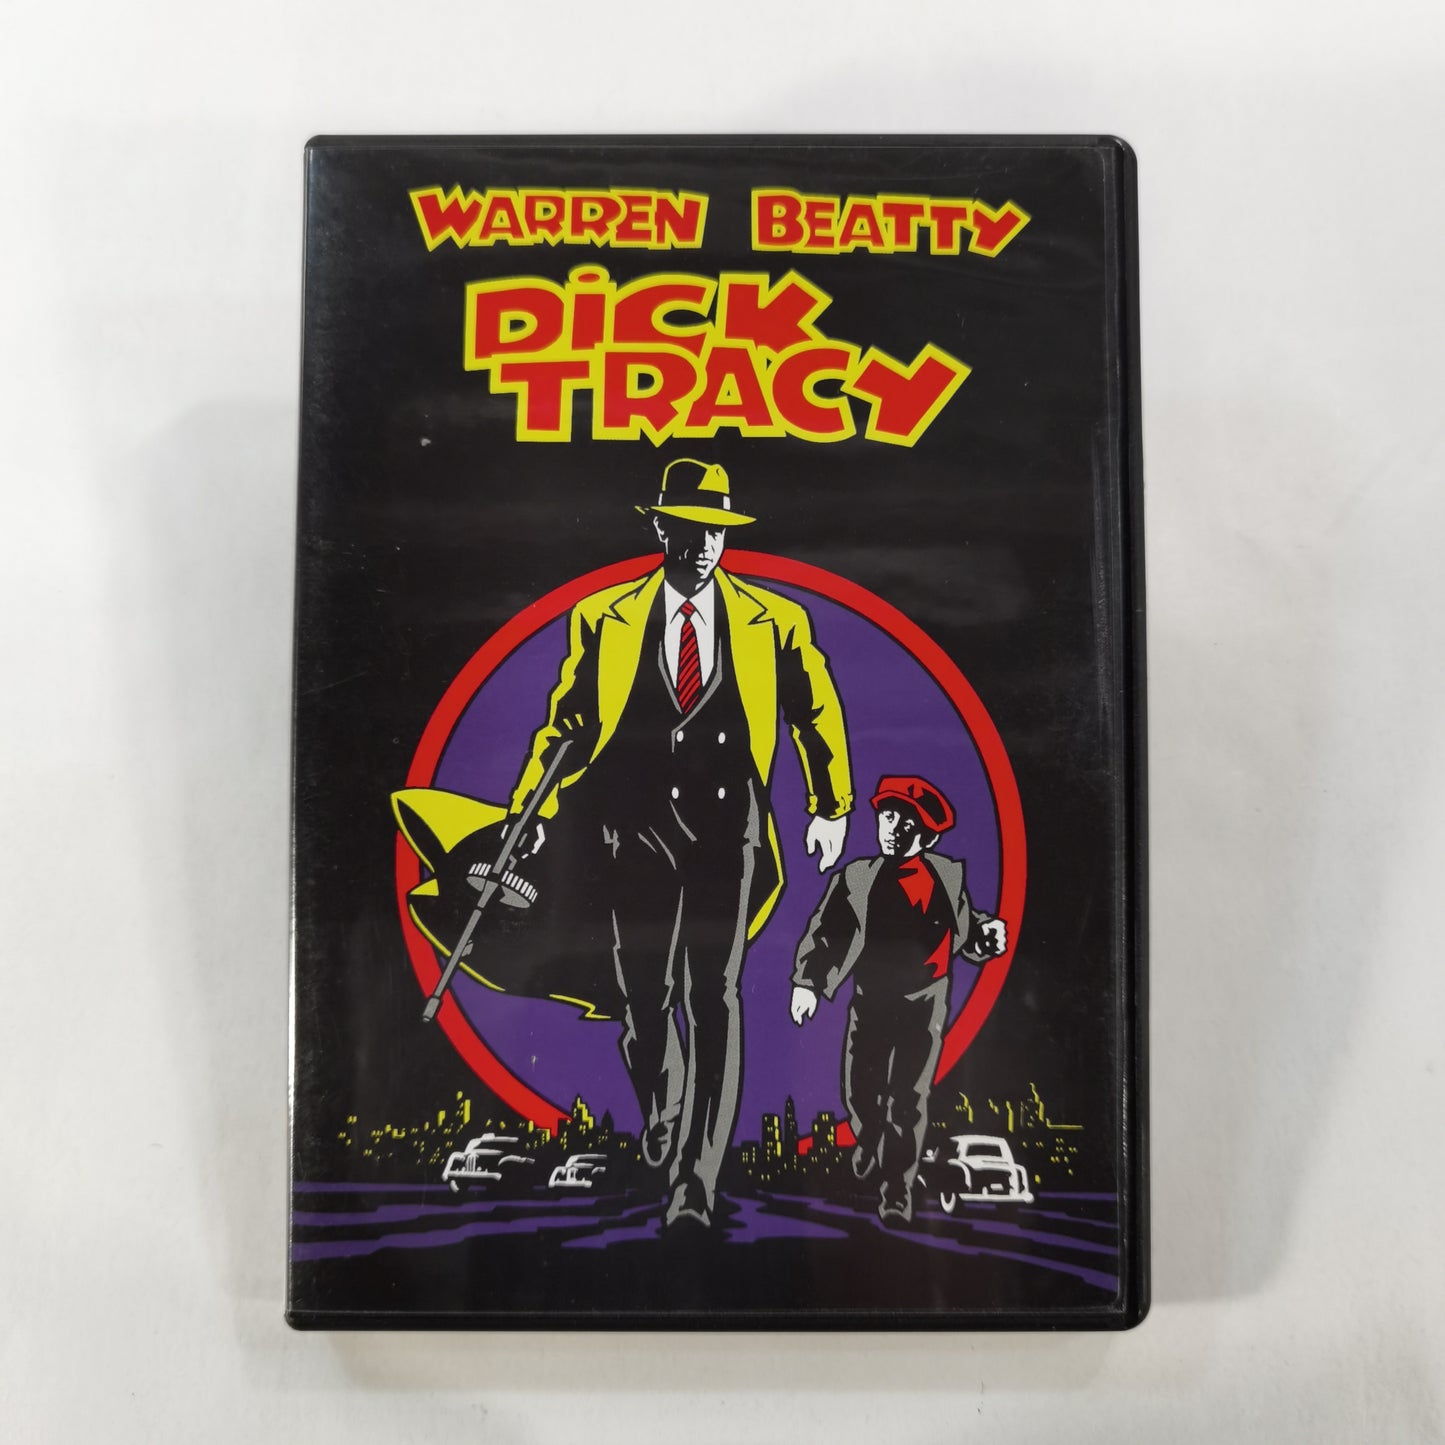 Dick Tracy (1990) - DVD US